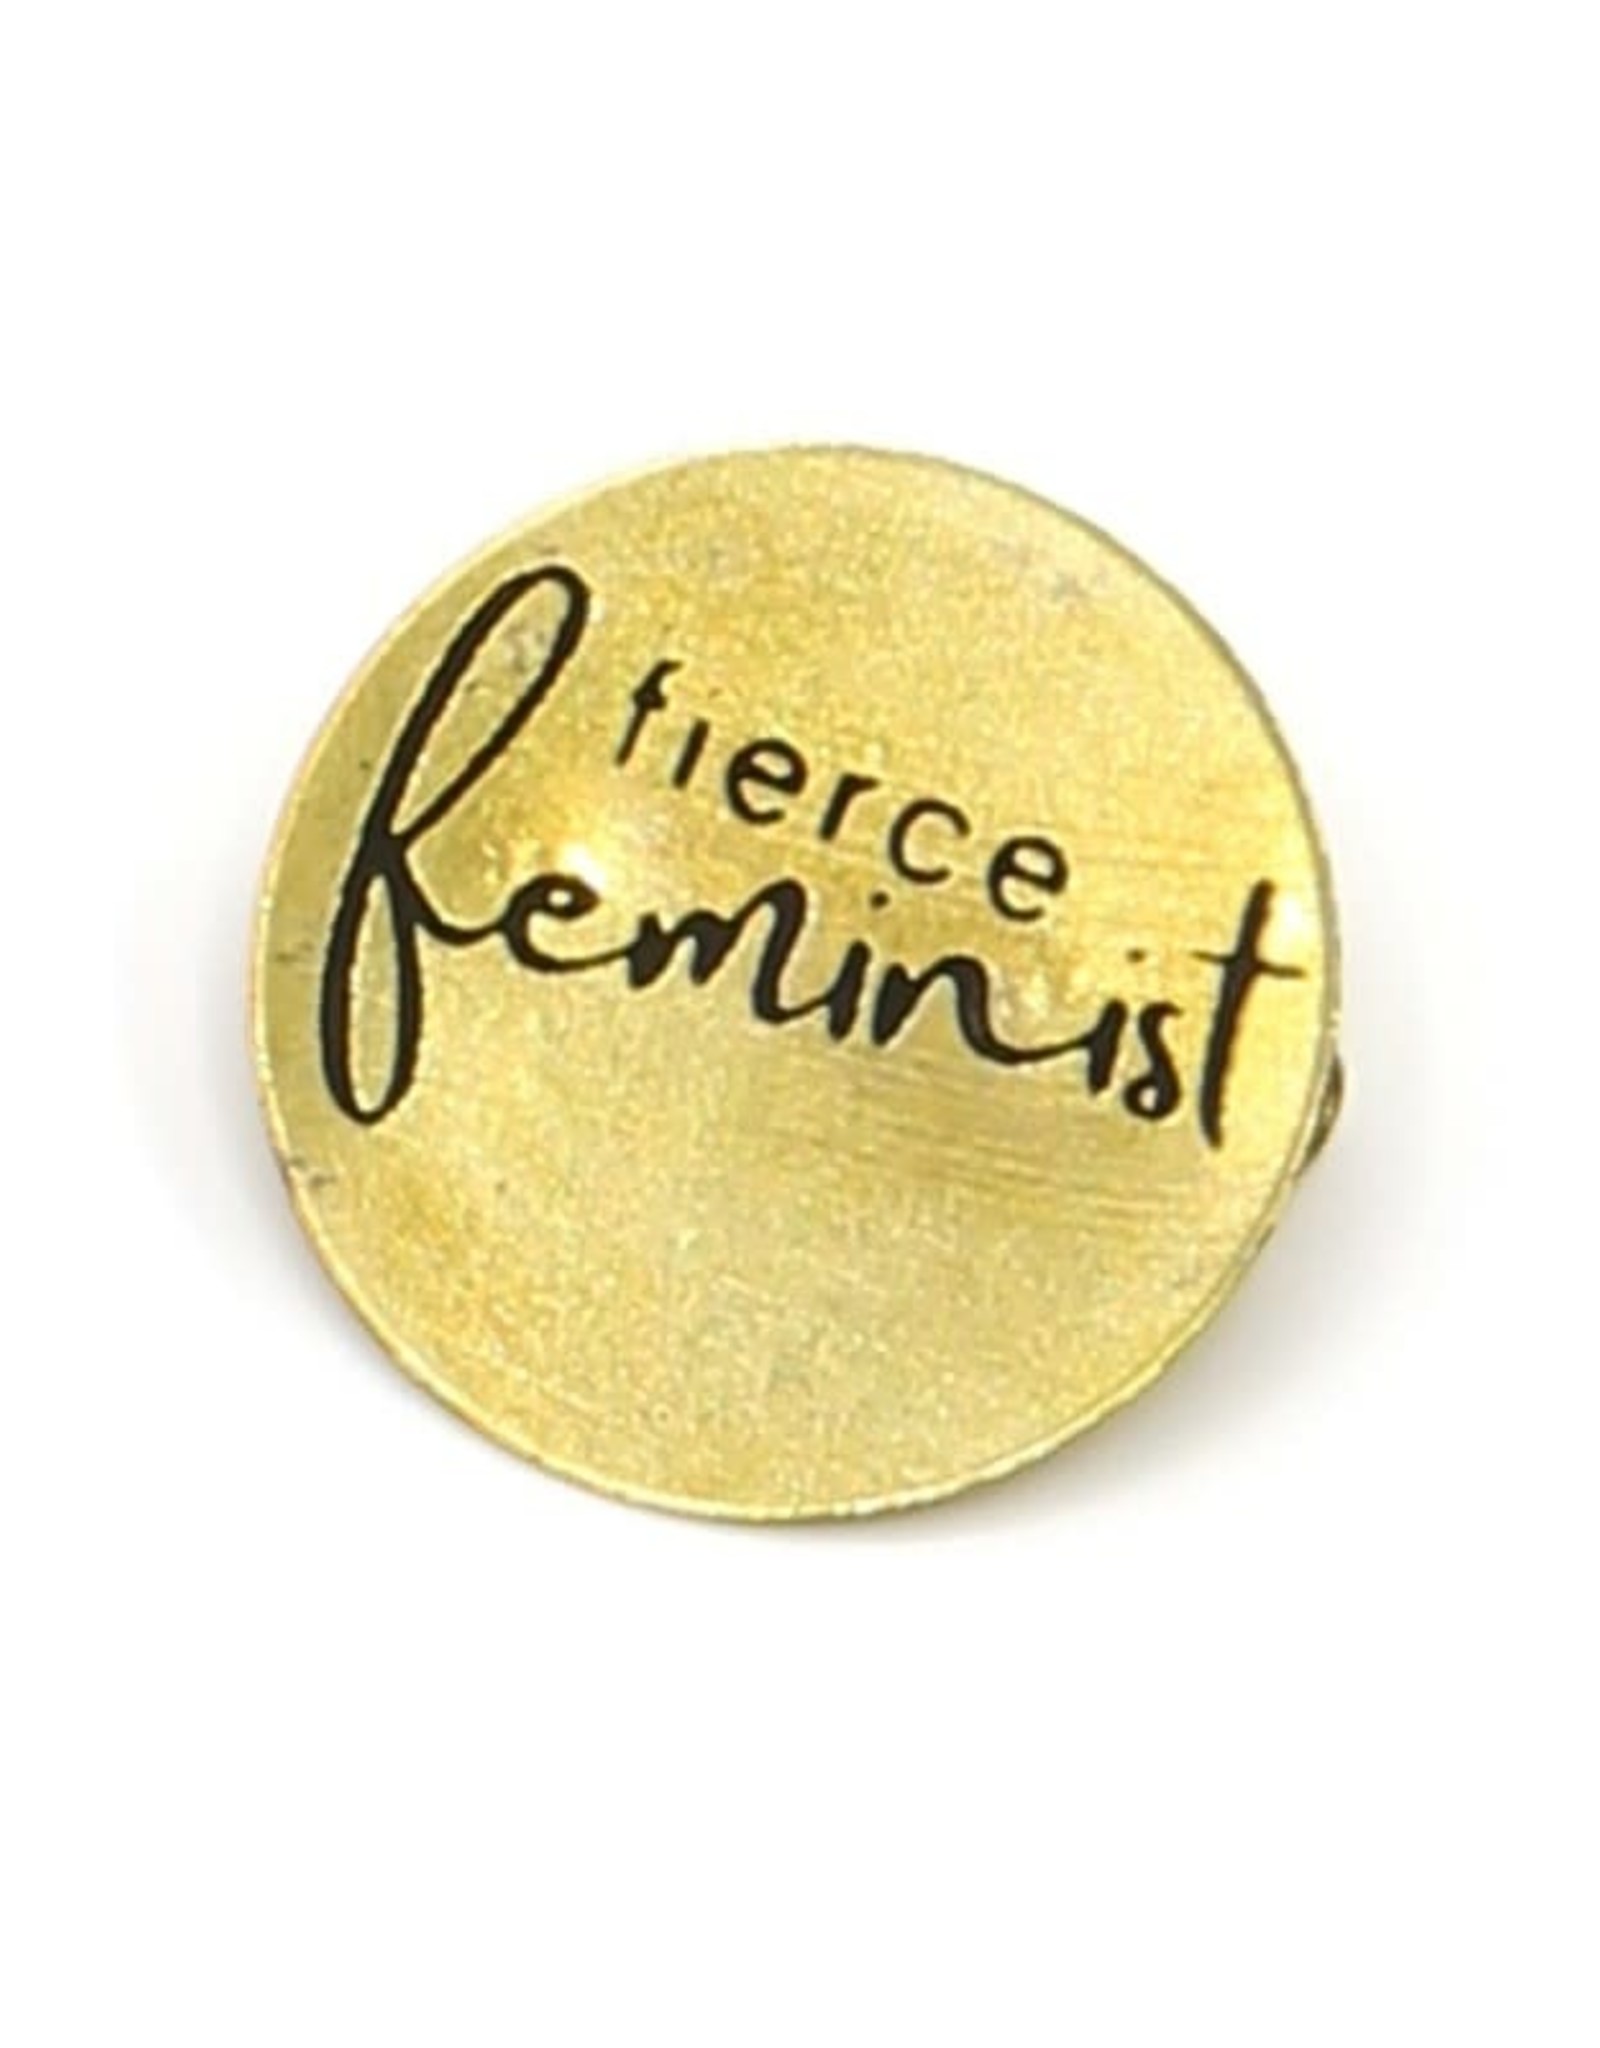 India Fierce Feminist Pin, India